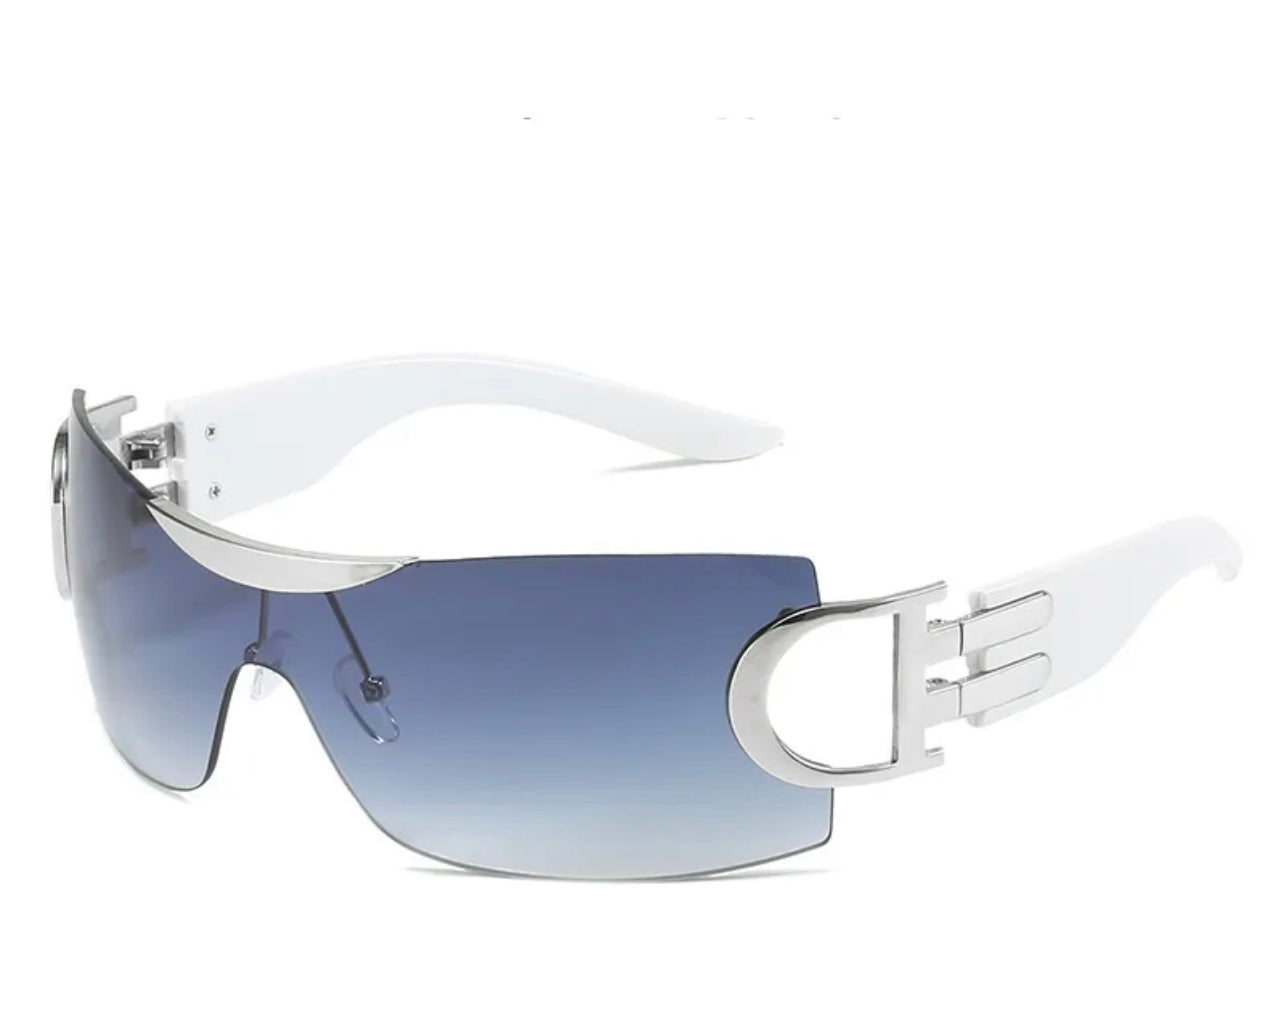 “Luxurious” Sunglasses